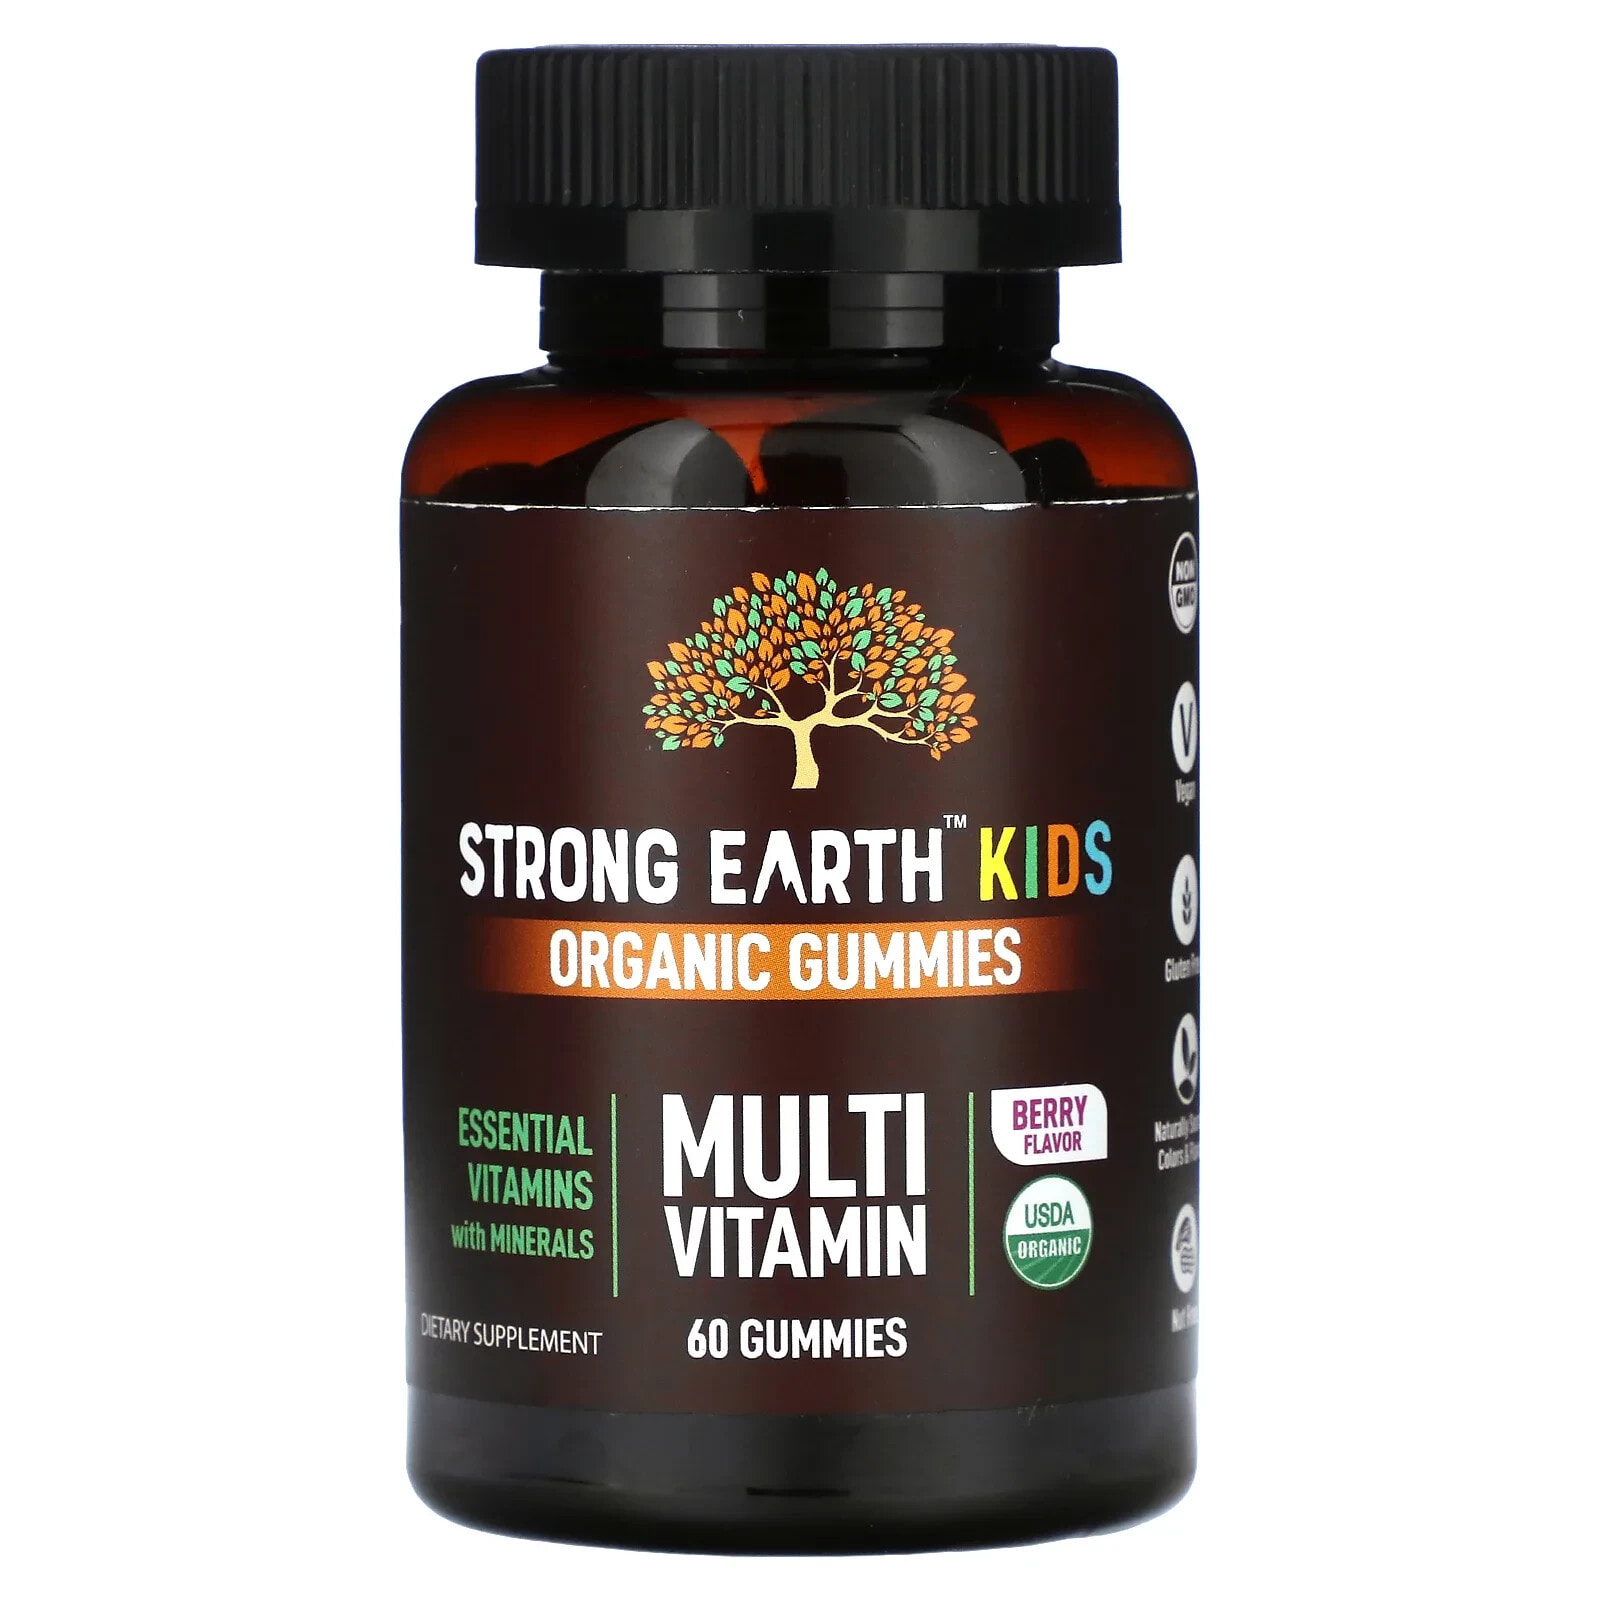 Strong Earth Kids Organic Gummies, Multi Vitamin, Berry, 60 Gummies